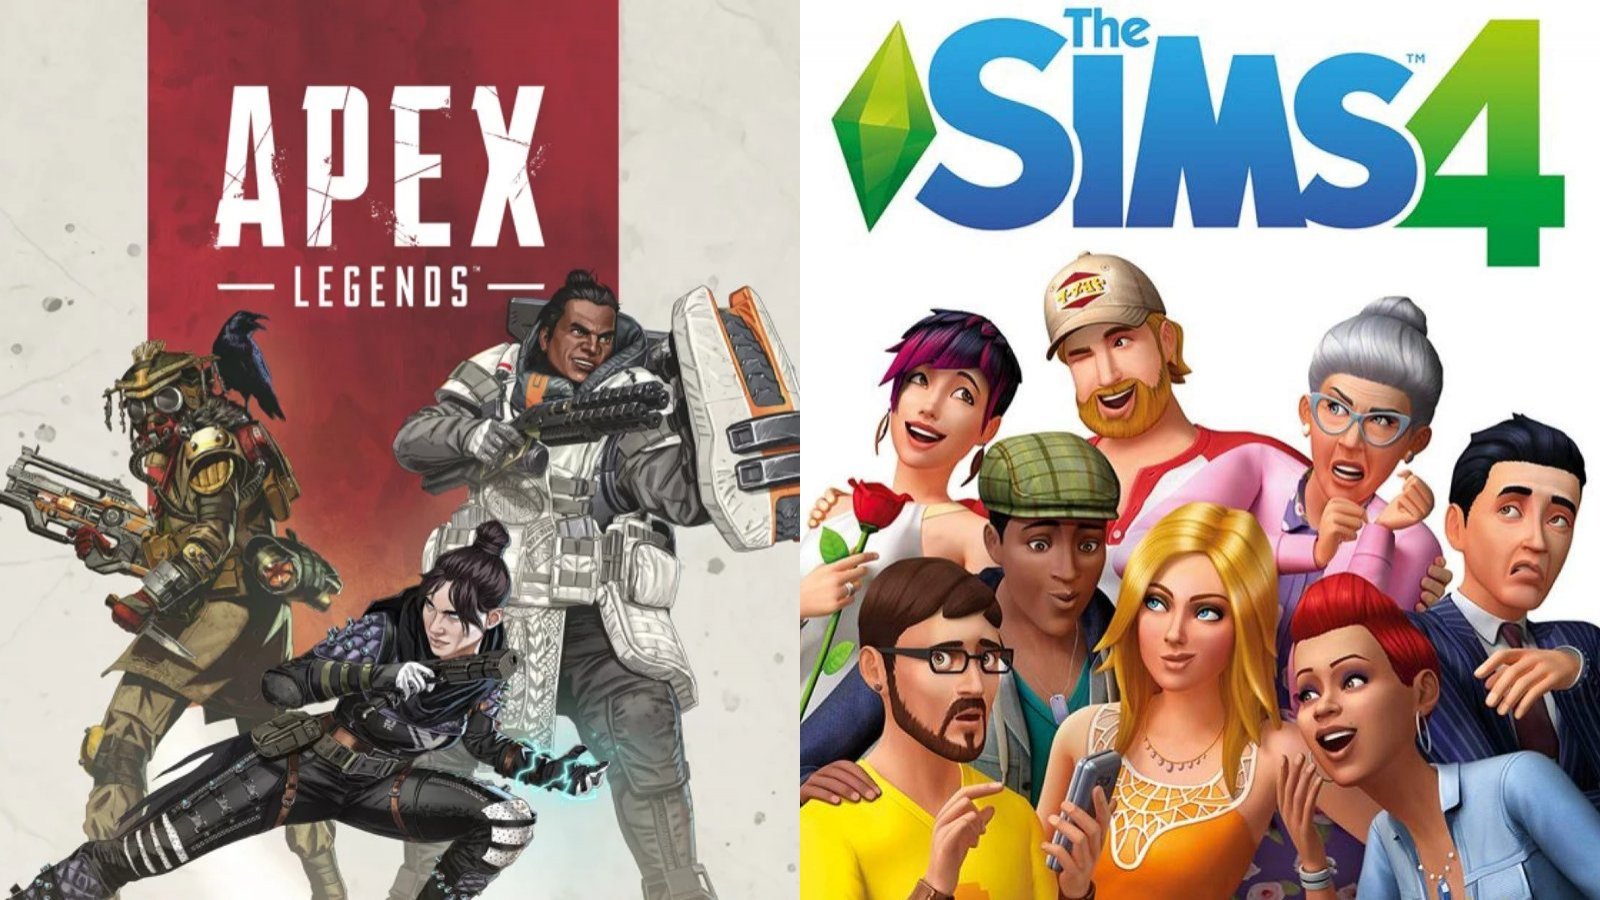 Electronic Arts. Los Sims. Apex.